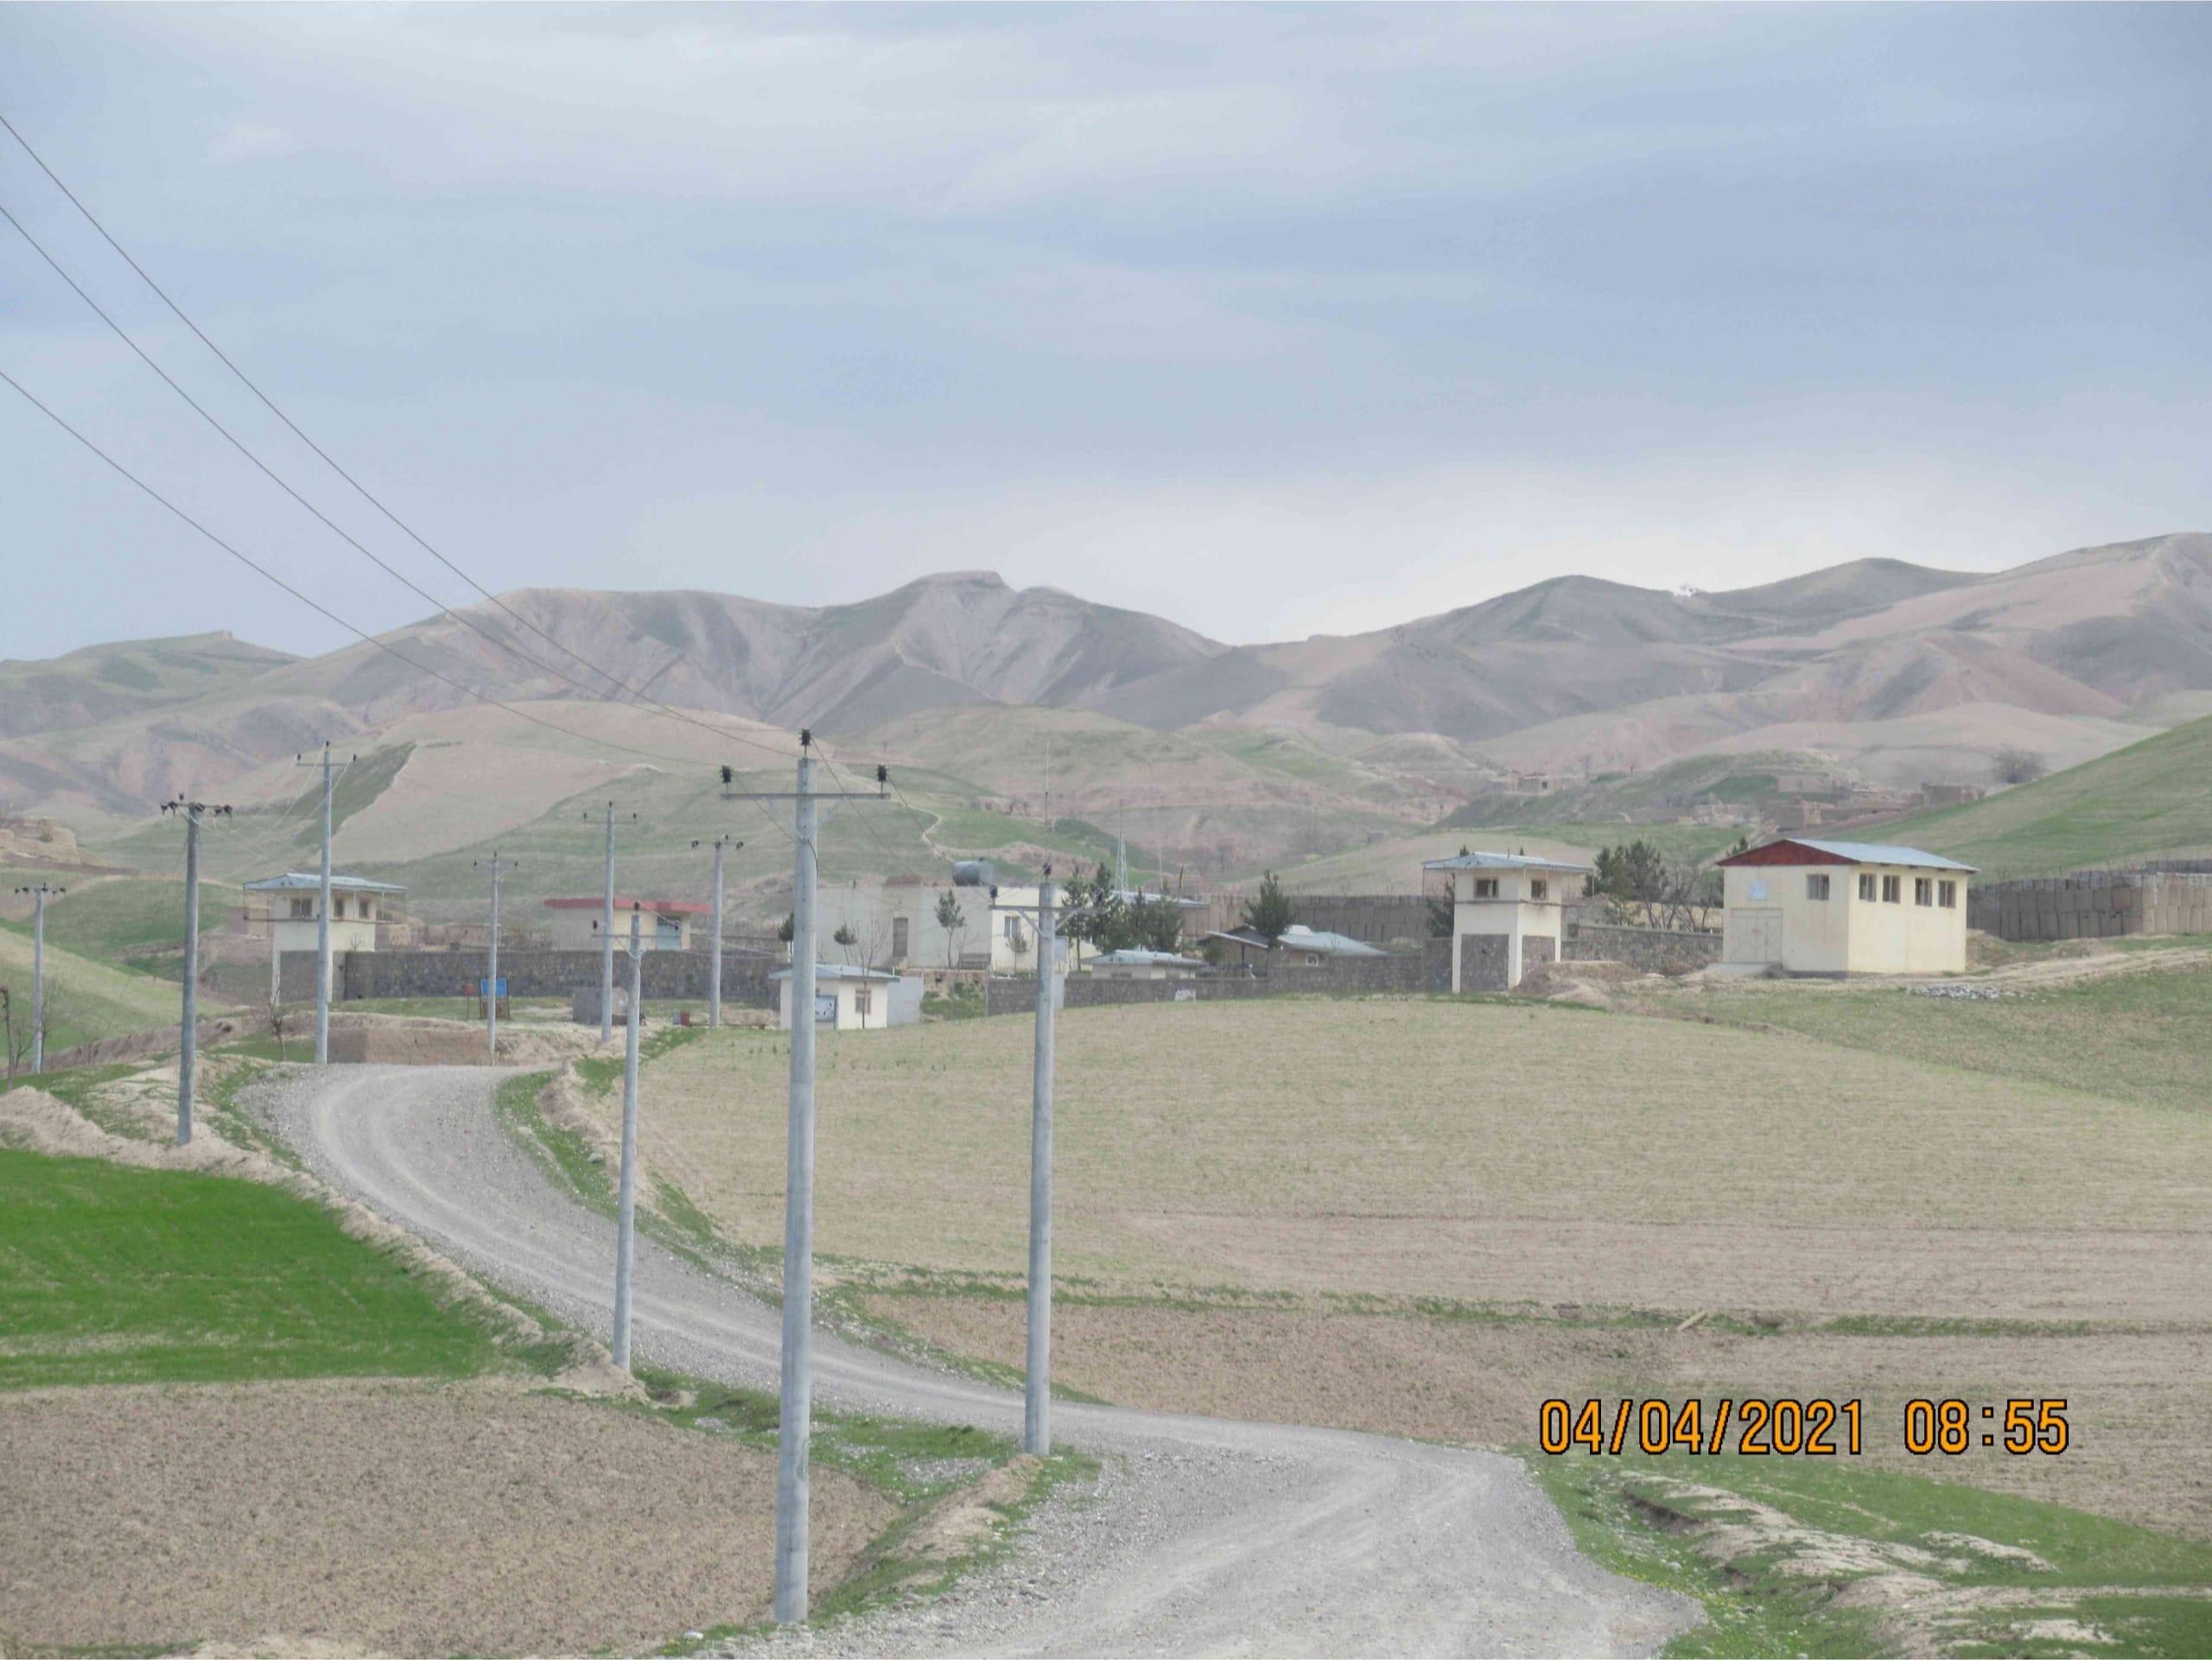 Transmission network reaches Hazar Sumoch district, Takhar province.